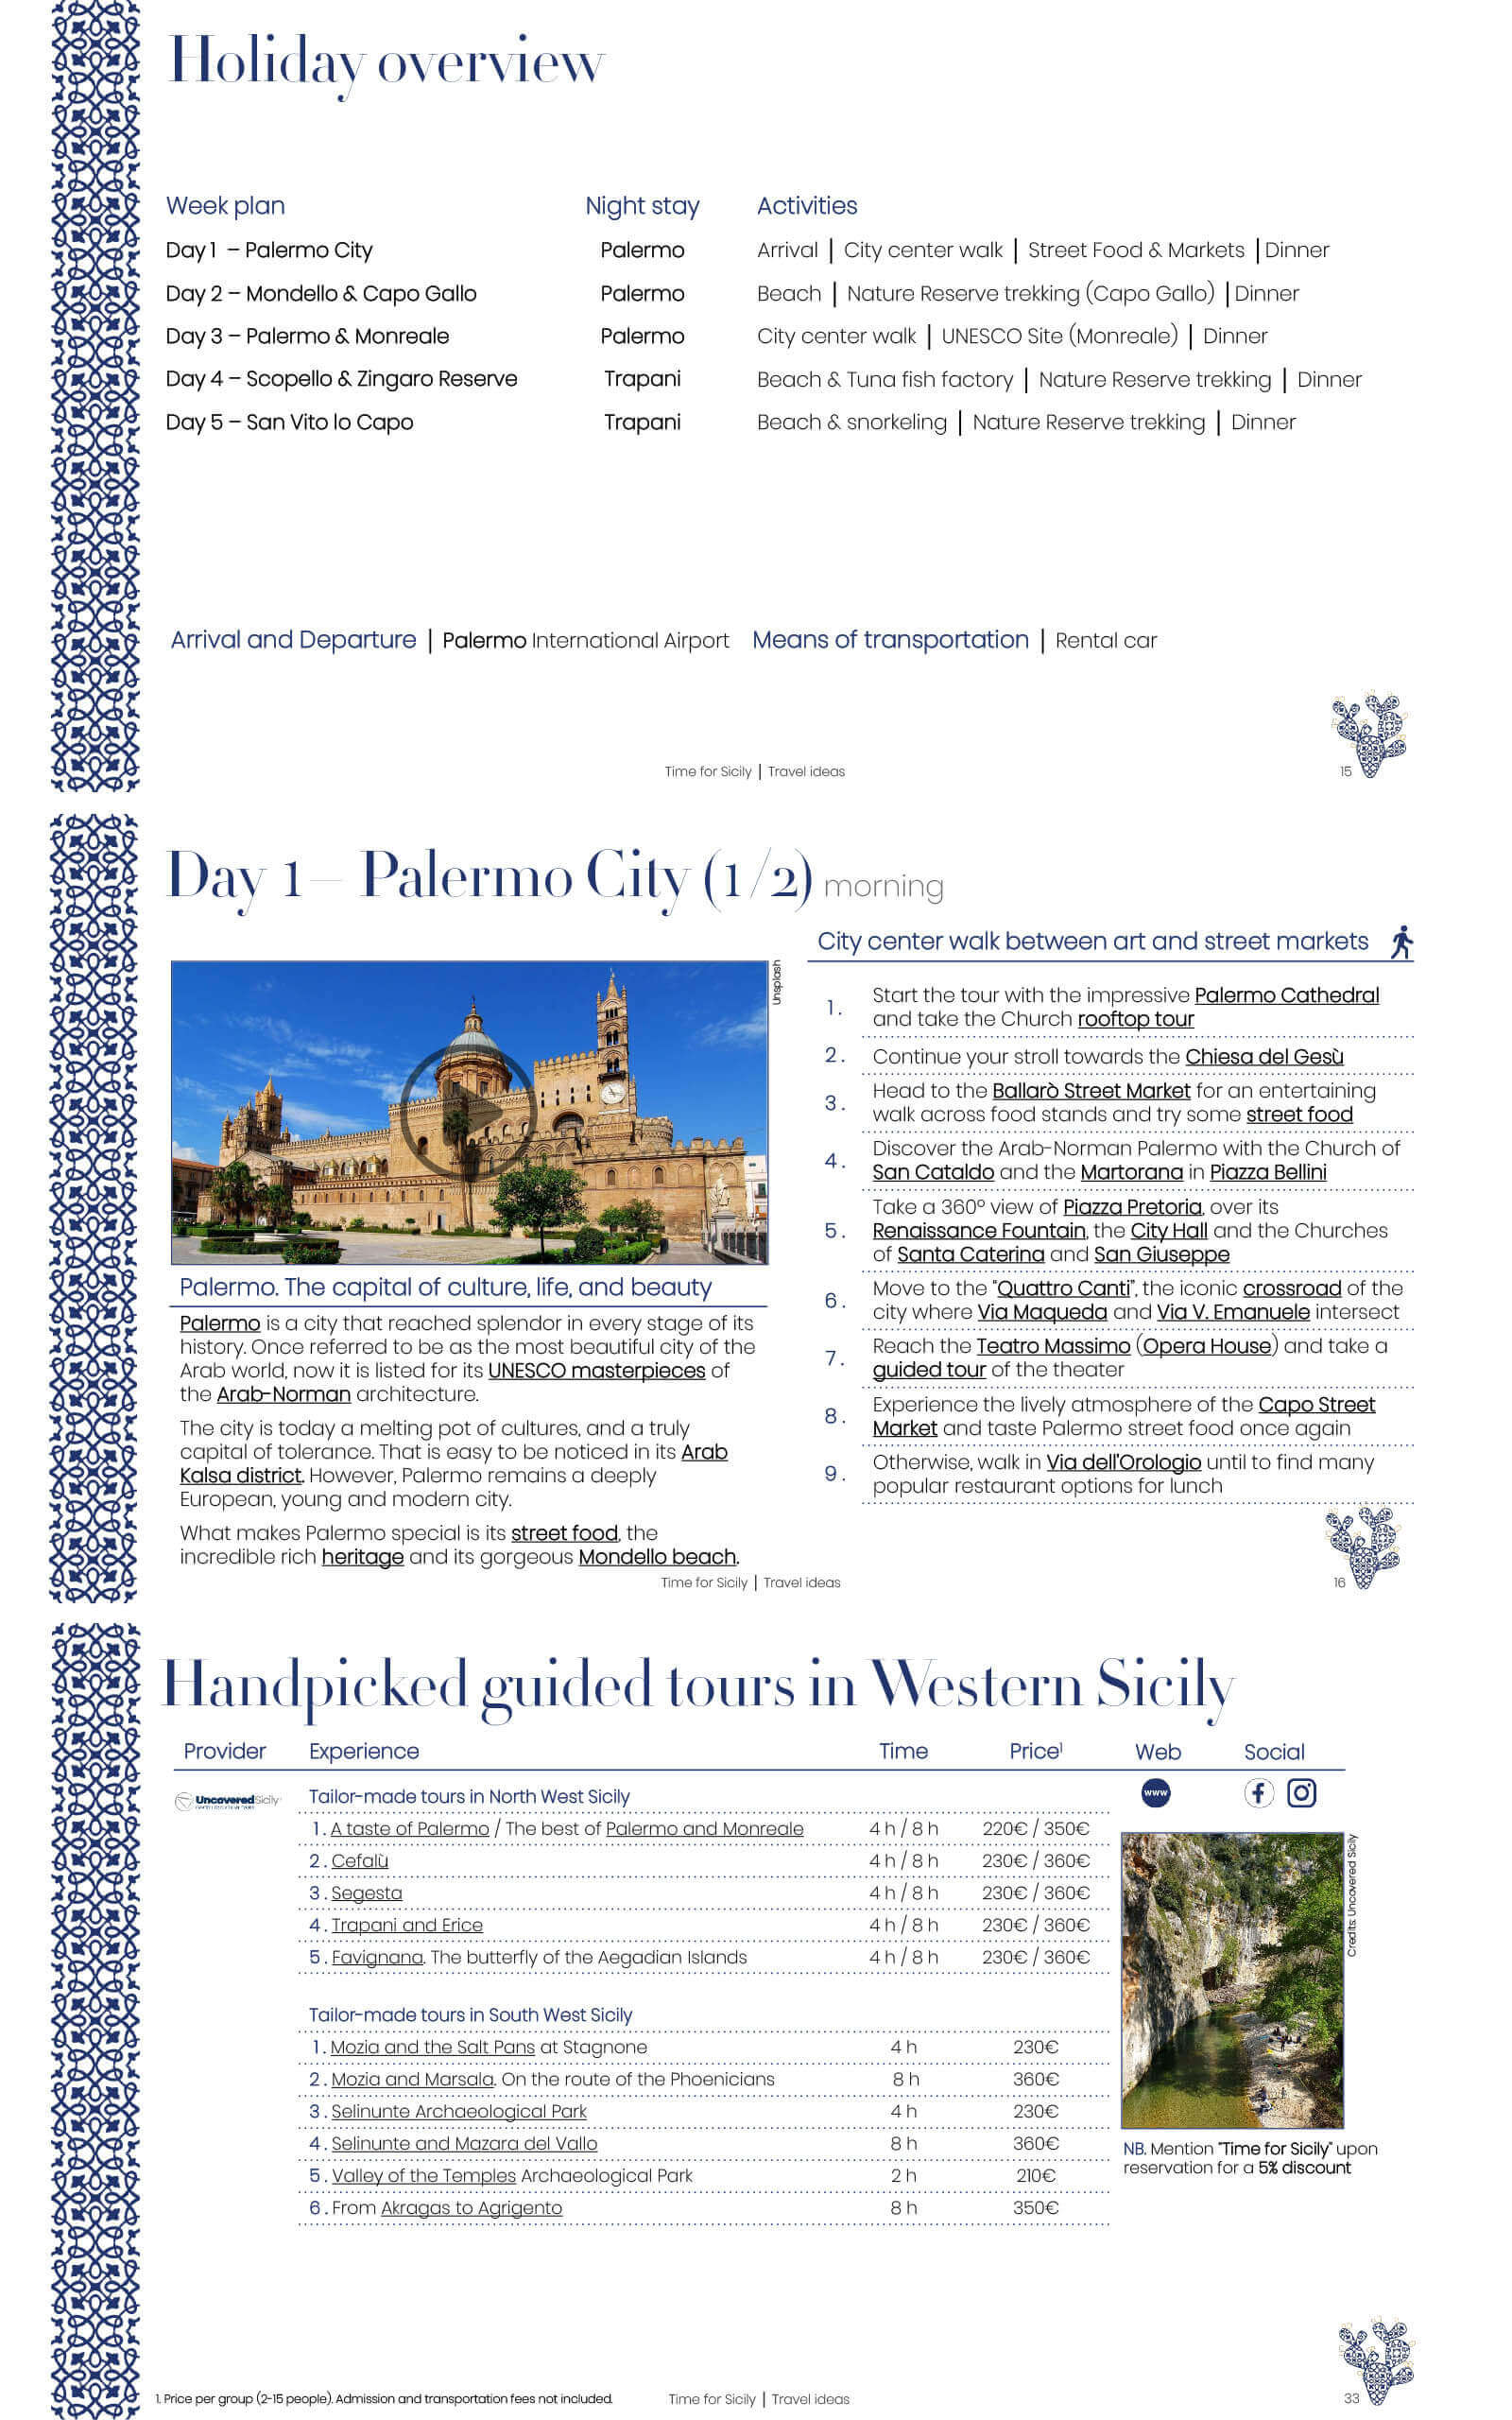 A long weekend in Western Sicily Digital Travel Guide book